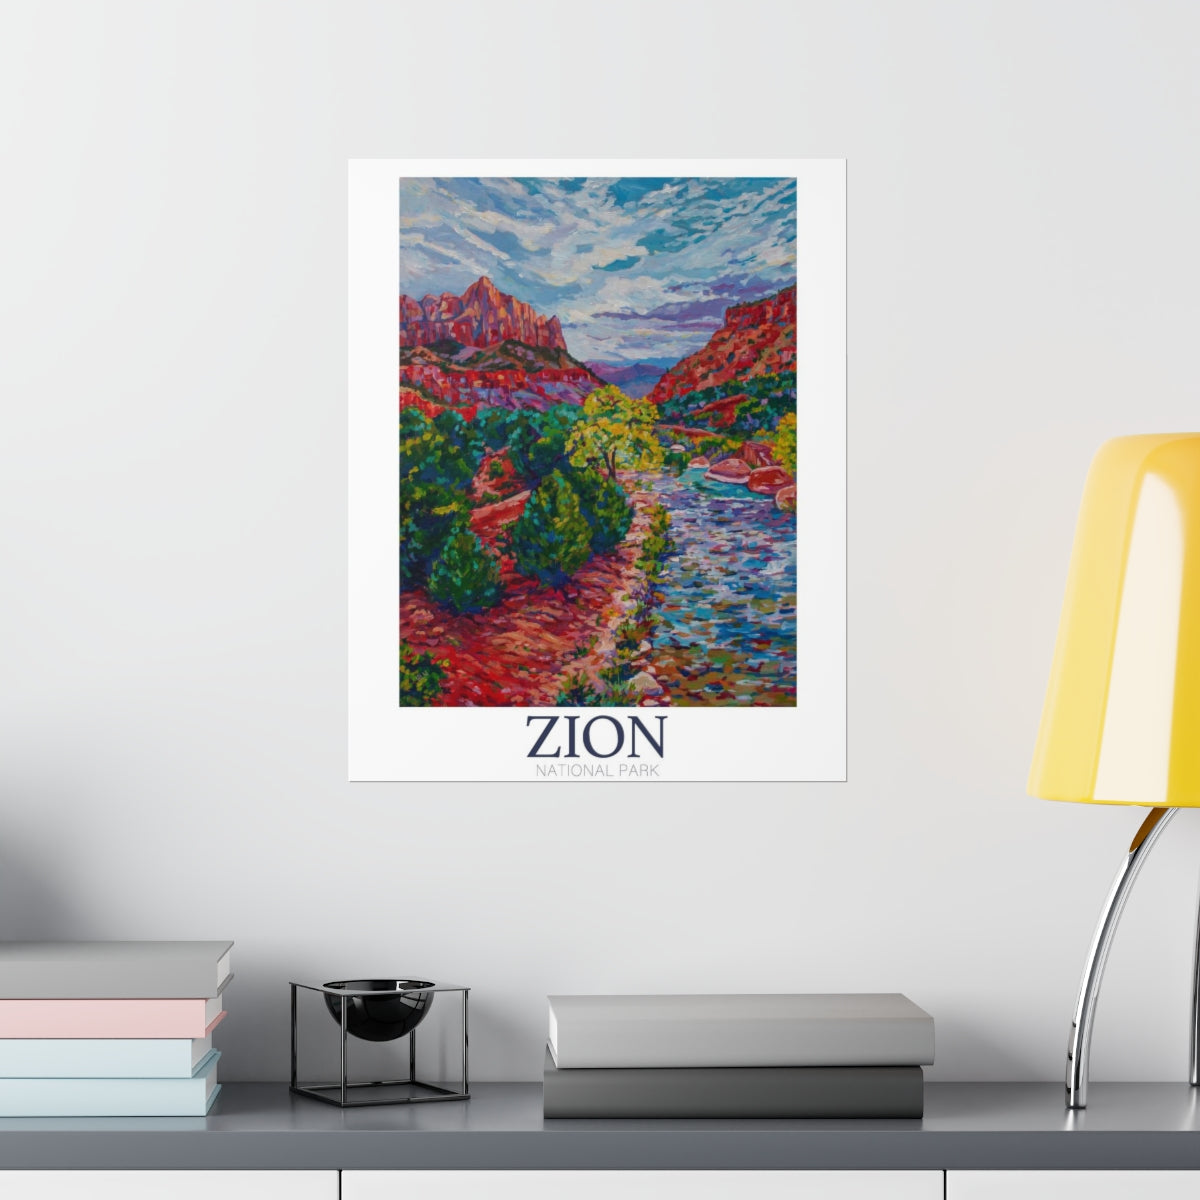 *Zion National Park Matte Vertical Posters